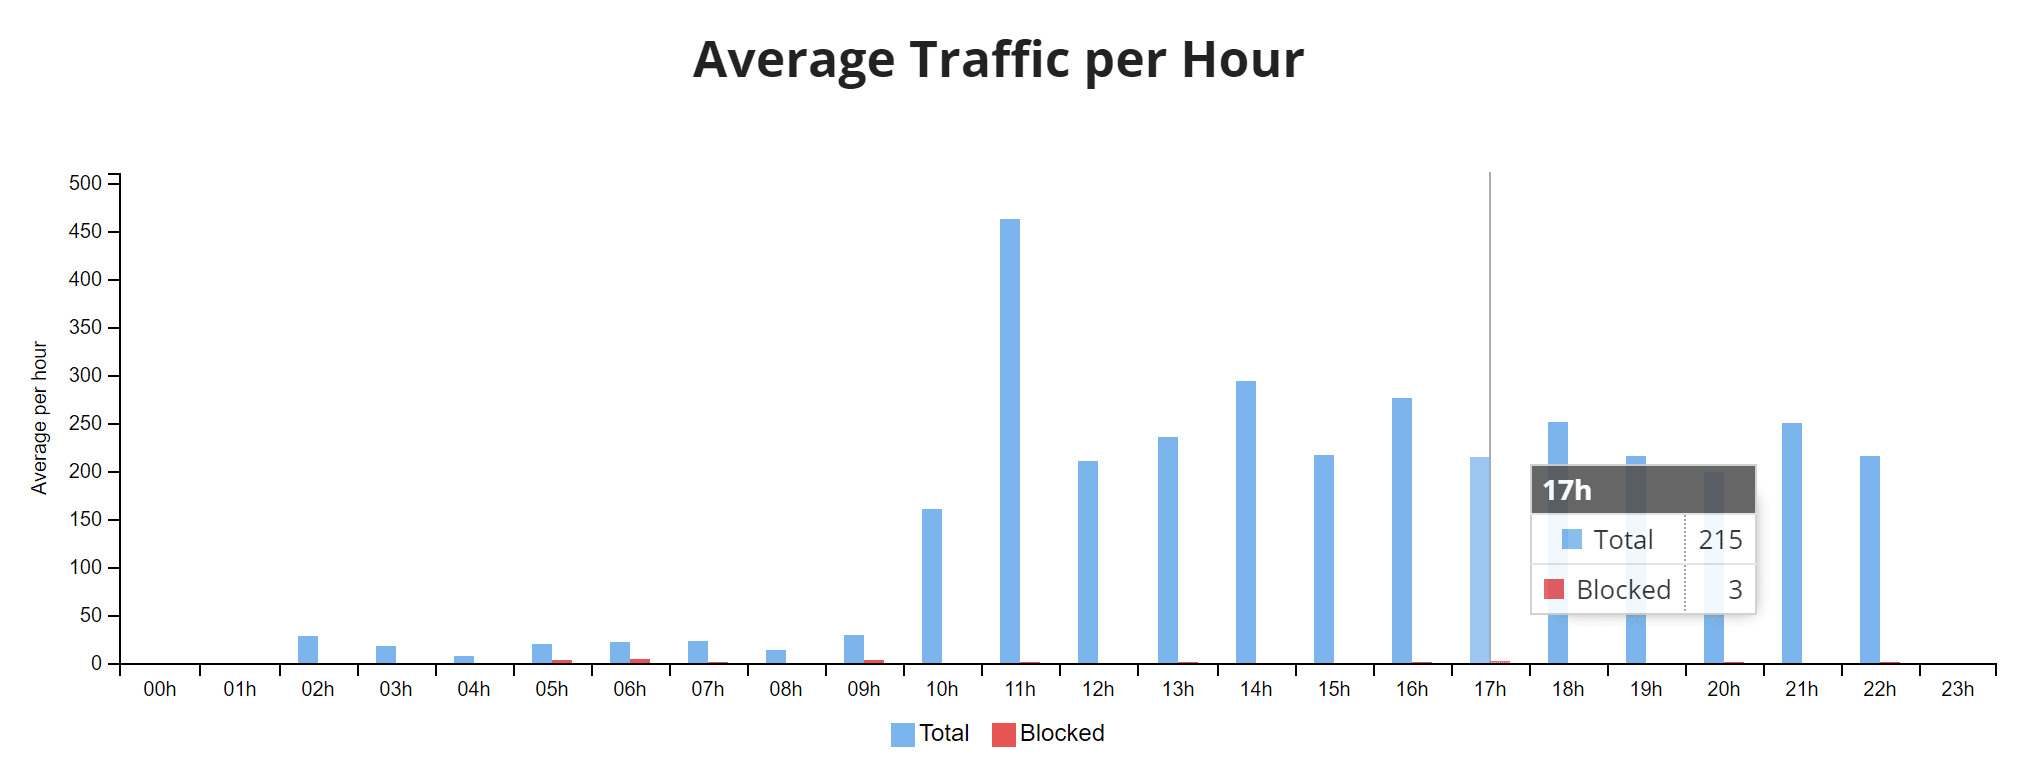 Average traffic per hour